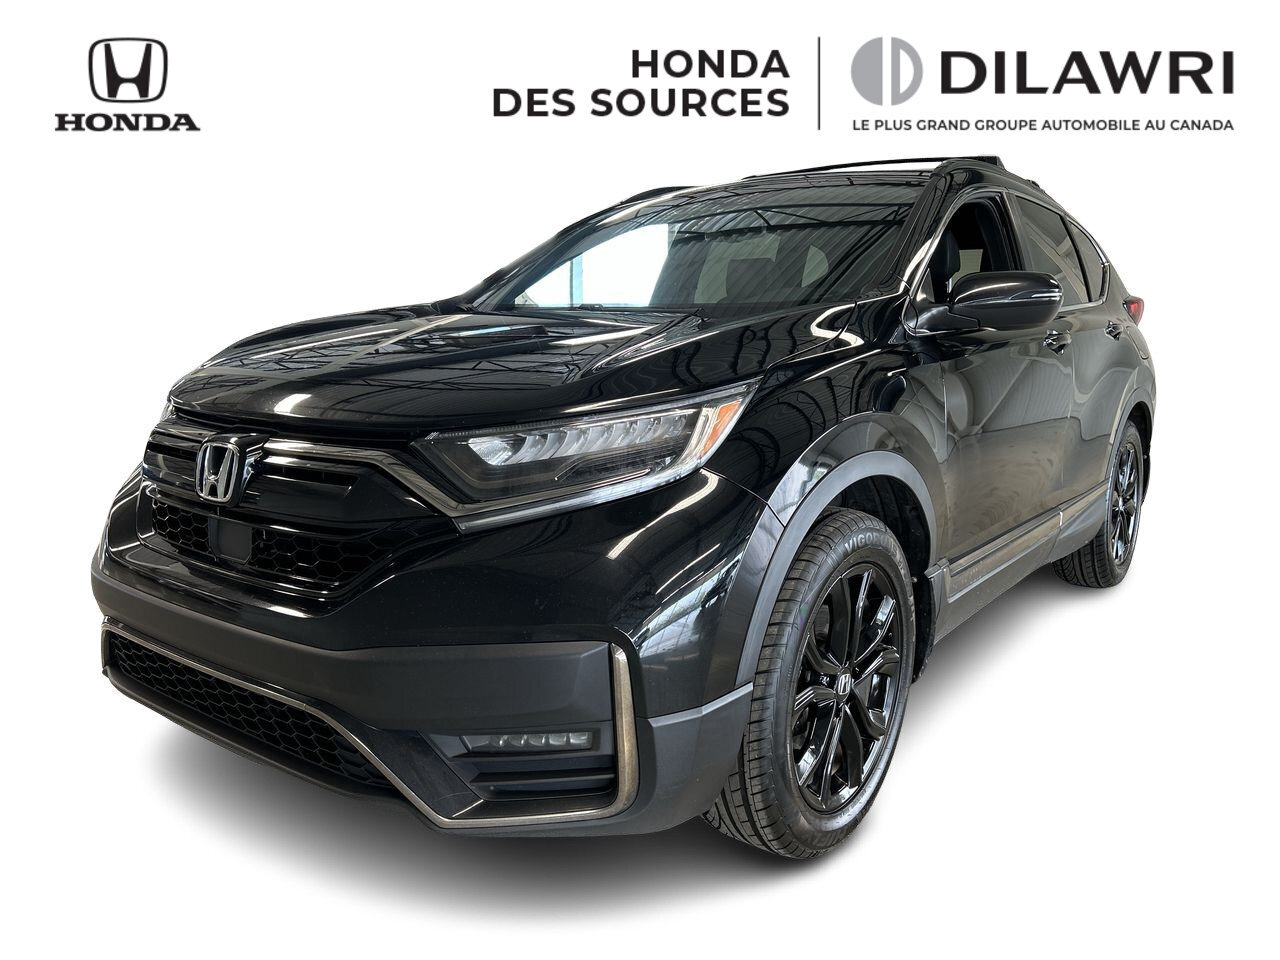 2020 Honda CR-V TOURING, 4X4, Cuir, Nav, Carplay, Bluetooth, USB 4